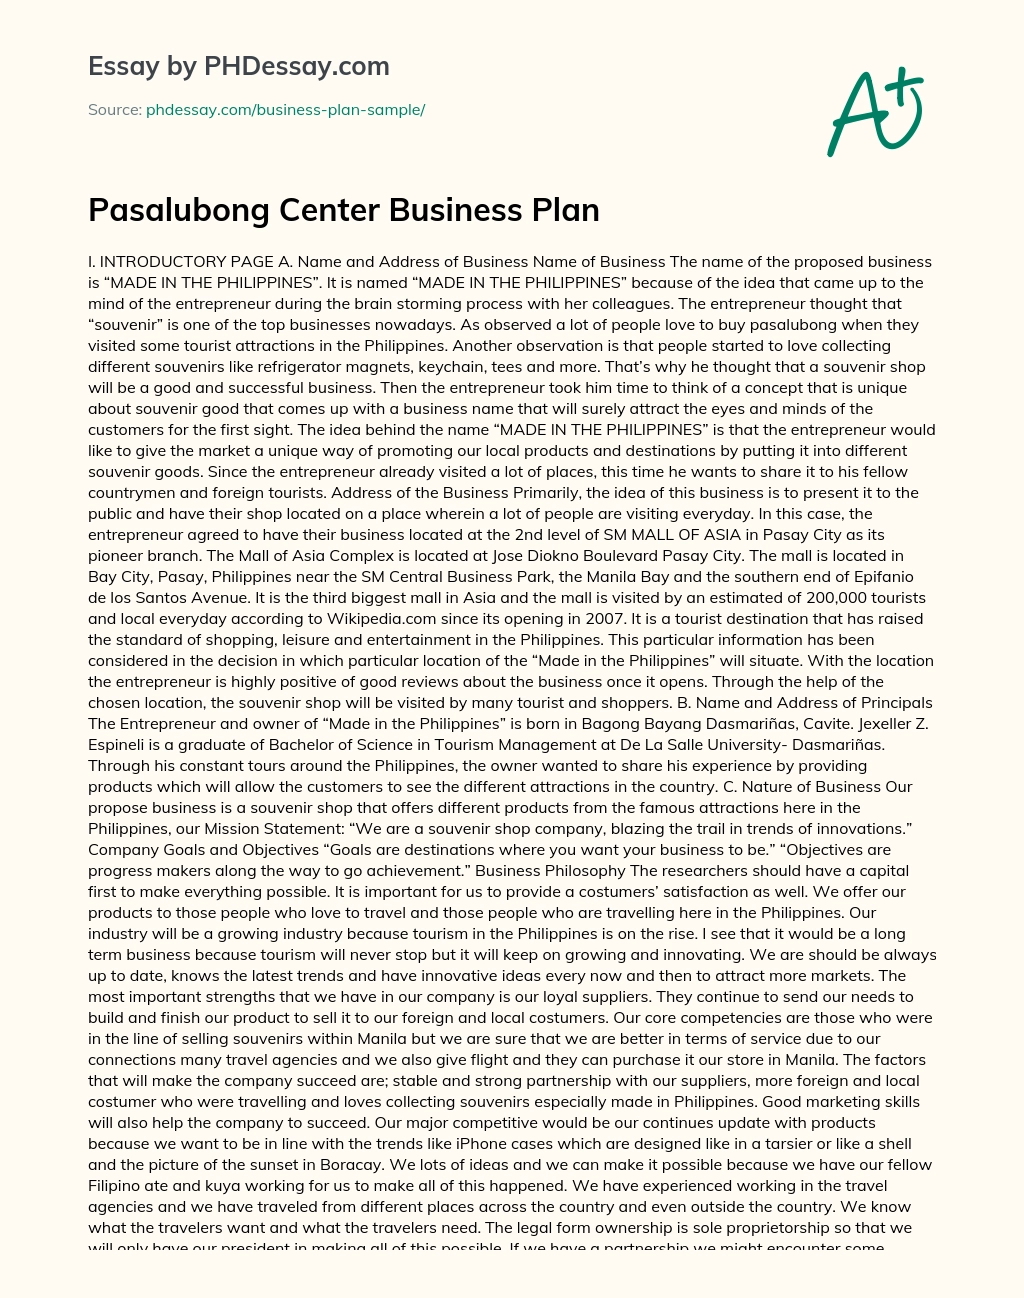 Pasalubong Center Business Plan essay